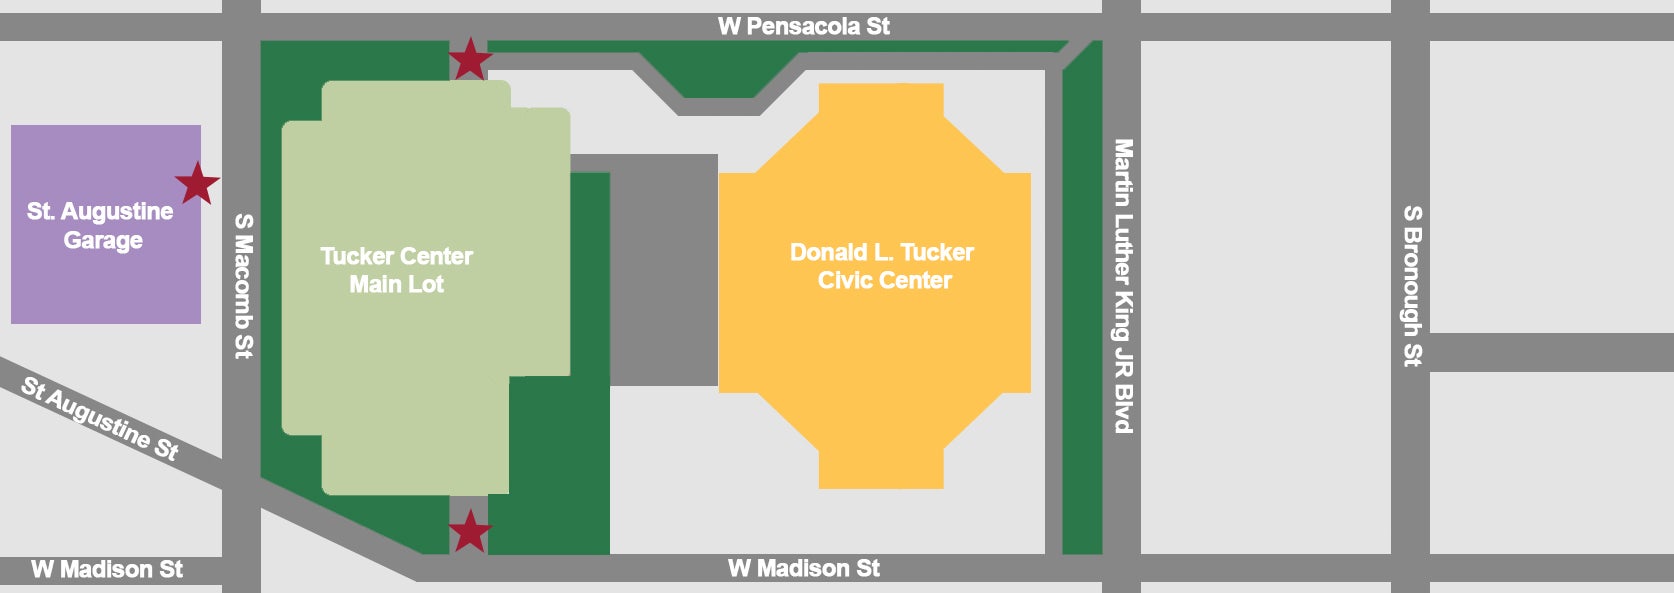 Directions & Parking Donald L Tucker Civic Center